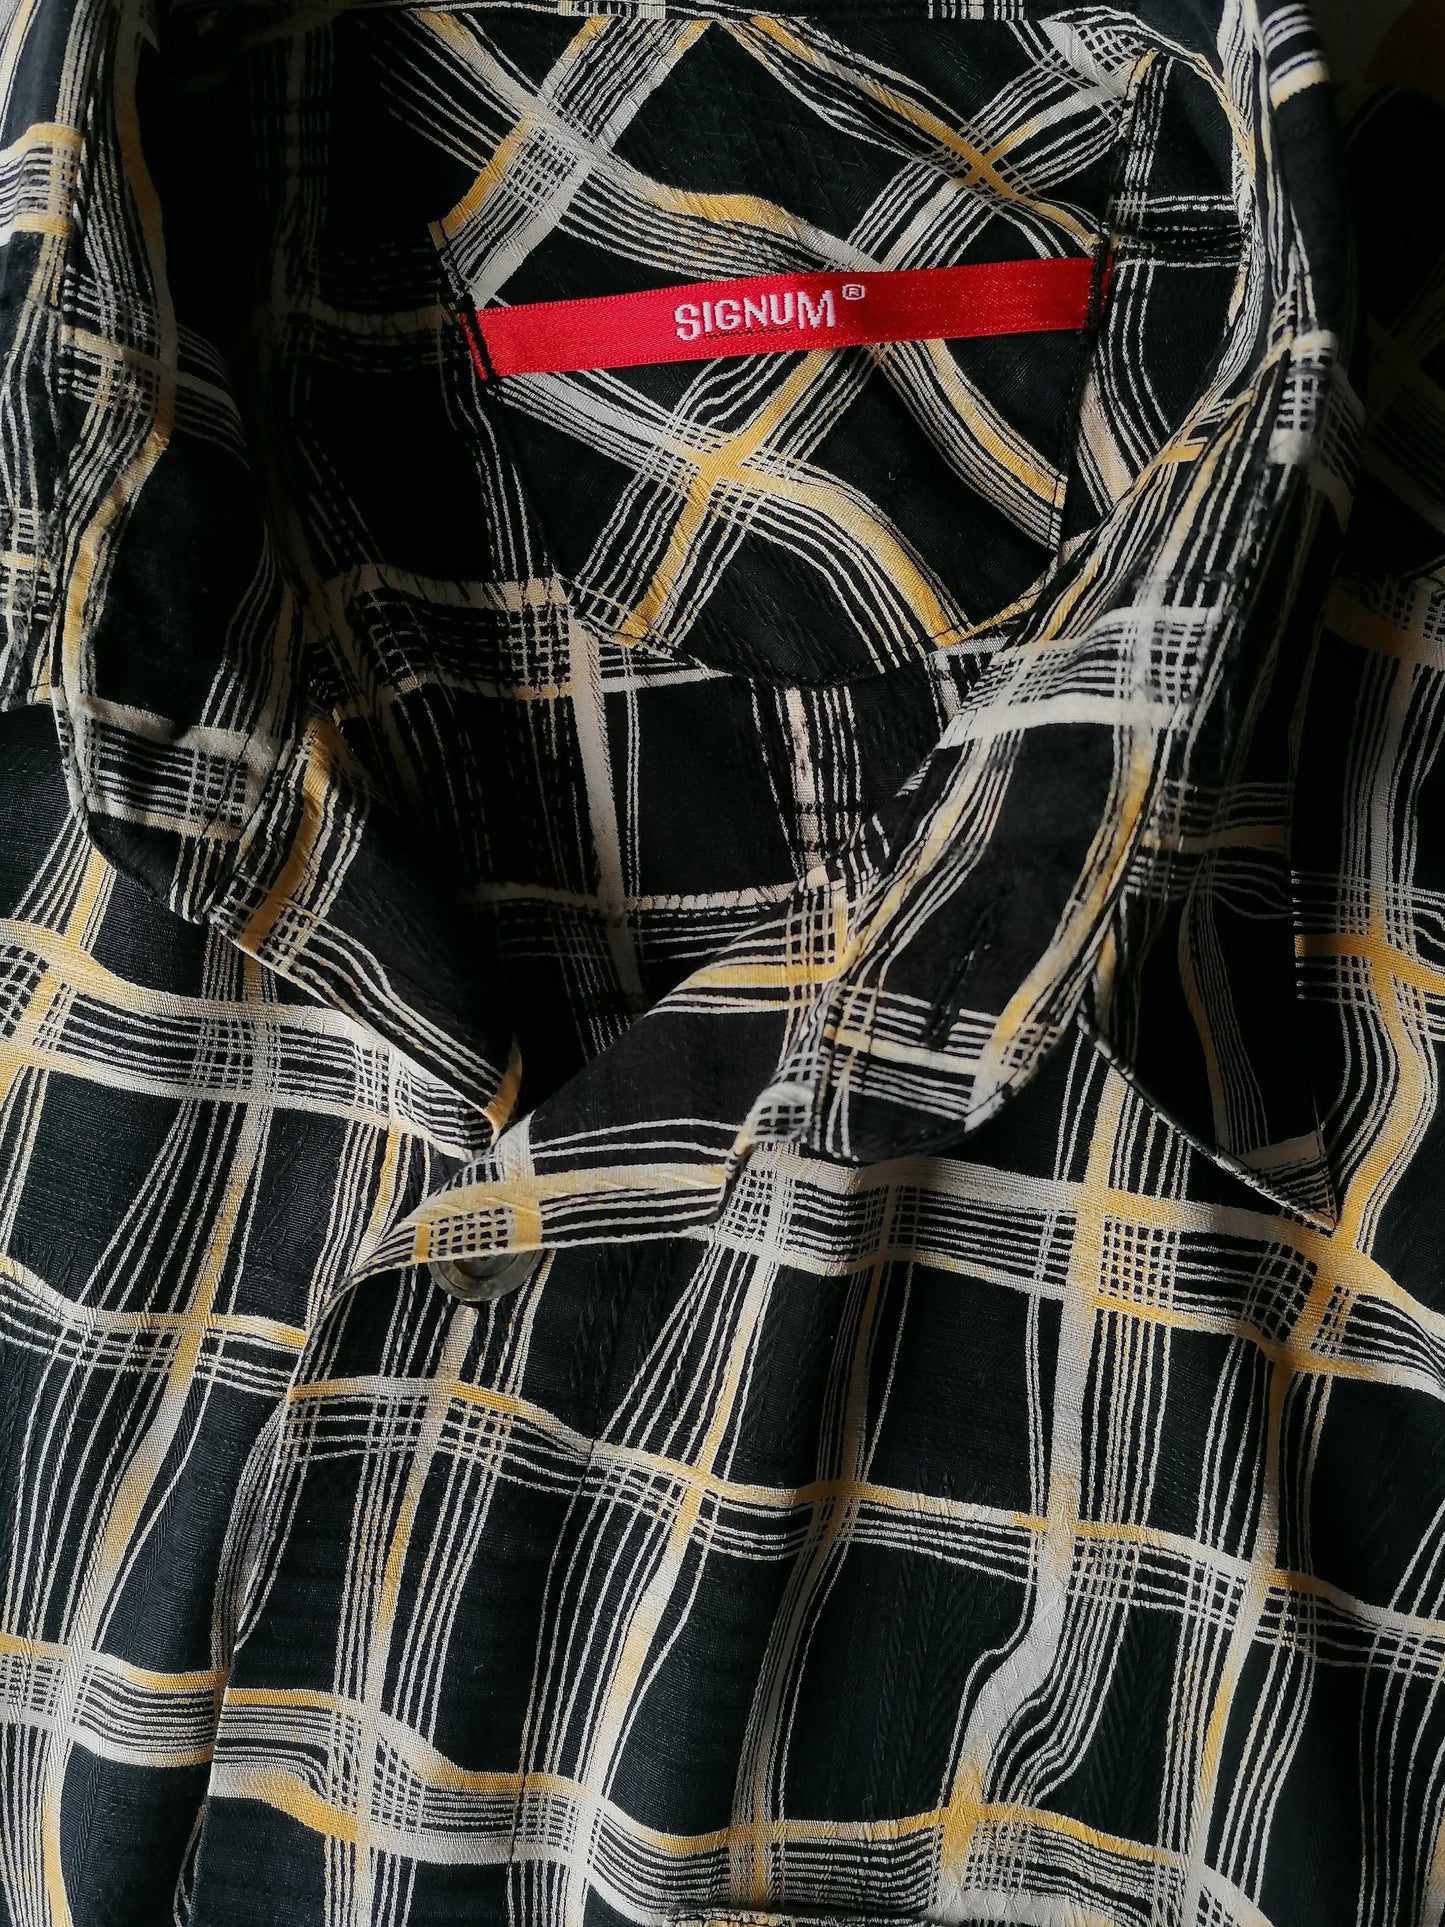 Camisa Vintage Signum manga corta. Impresión amarilla negra. Tamaño XXL / 2XL.